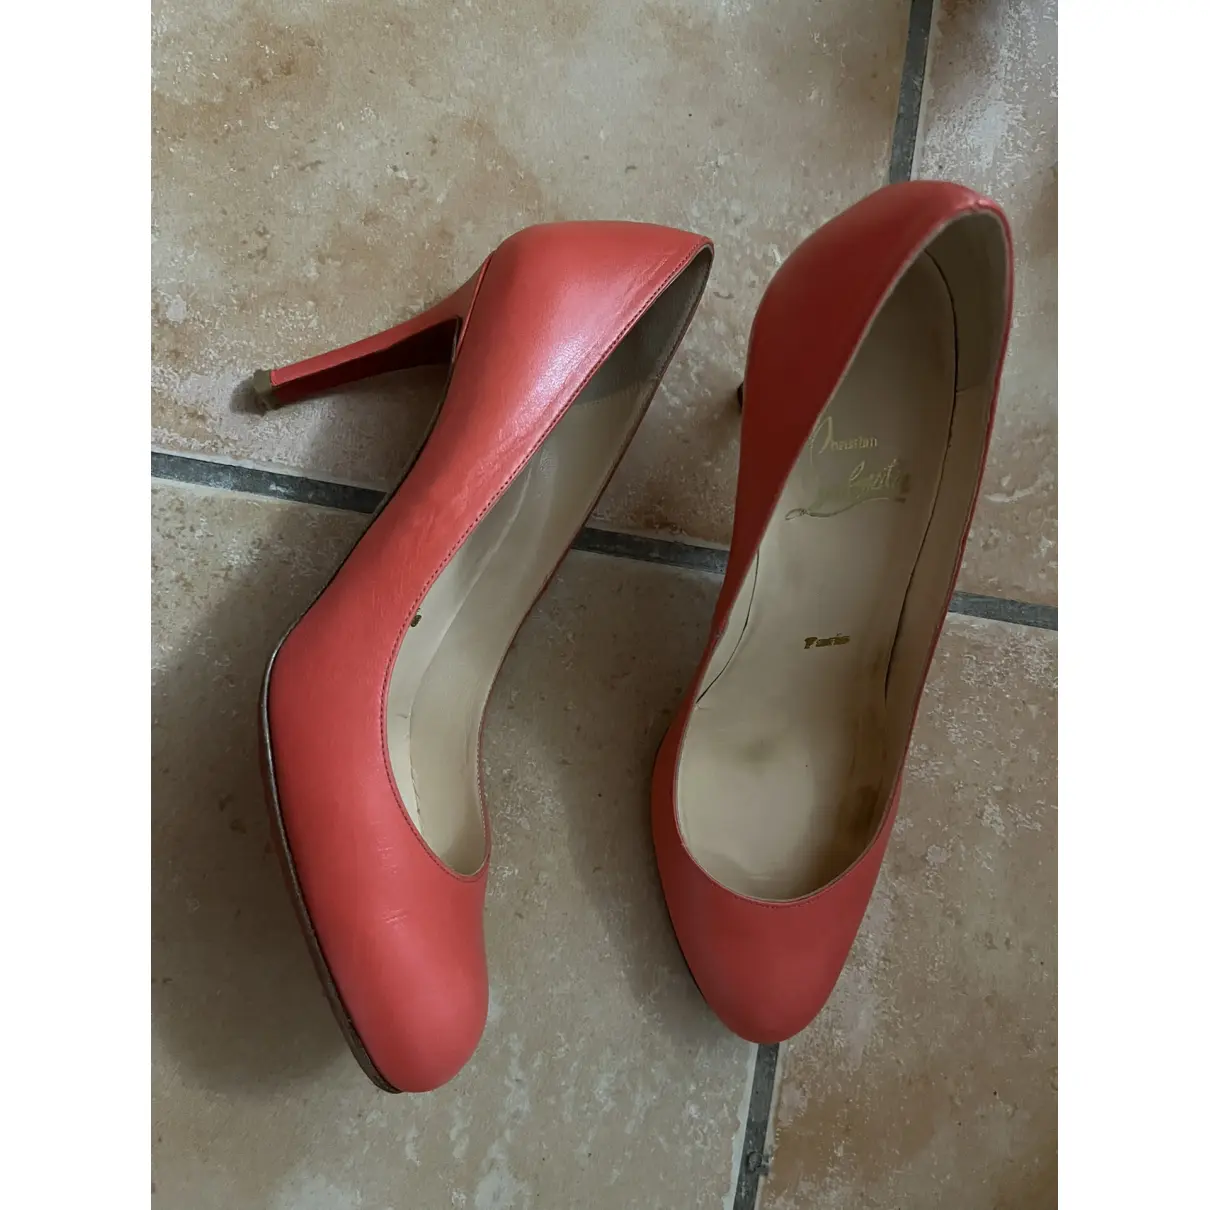 Buy Christian Louboutin Simple pump leather heels online